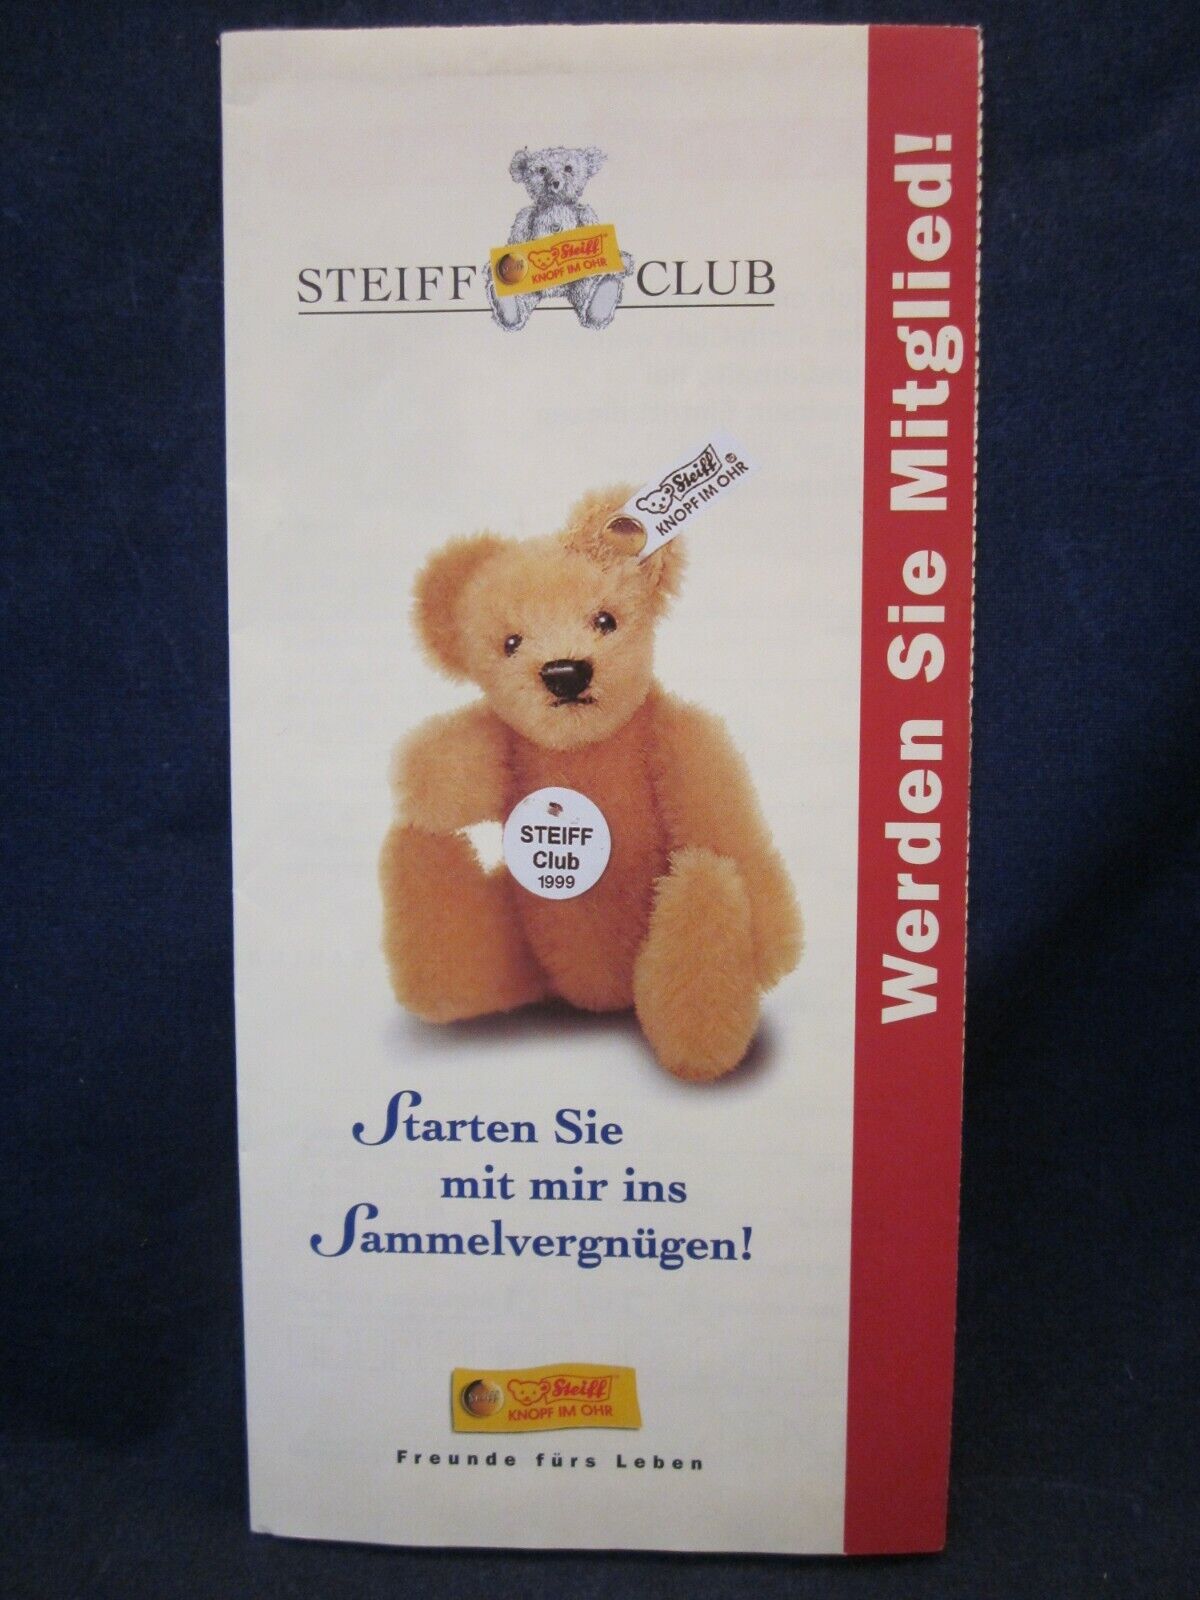 Steiff Club Application in GERMAN VINTAGE EXCELLENT